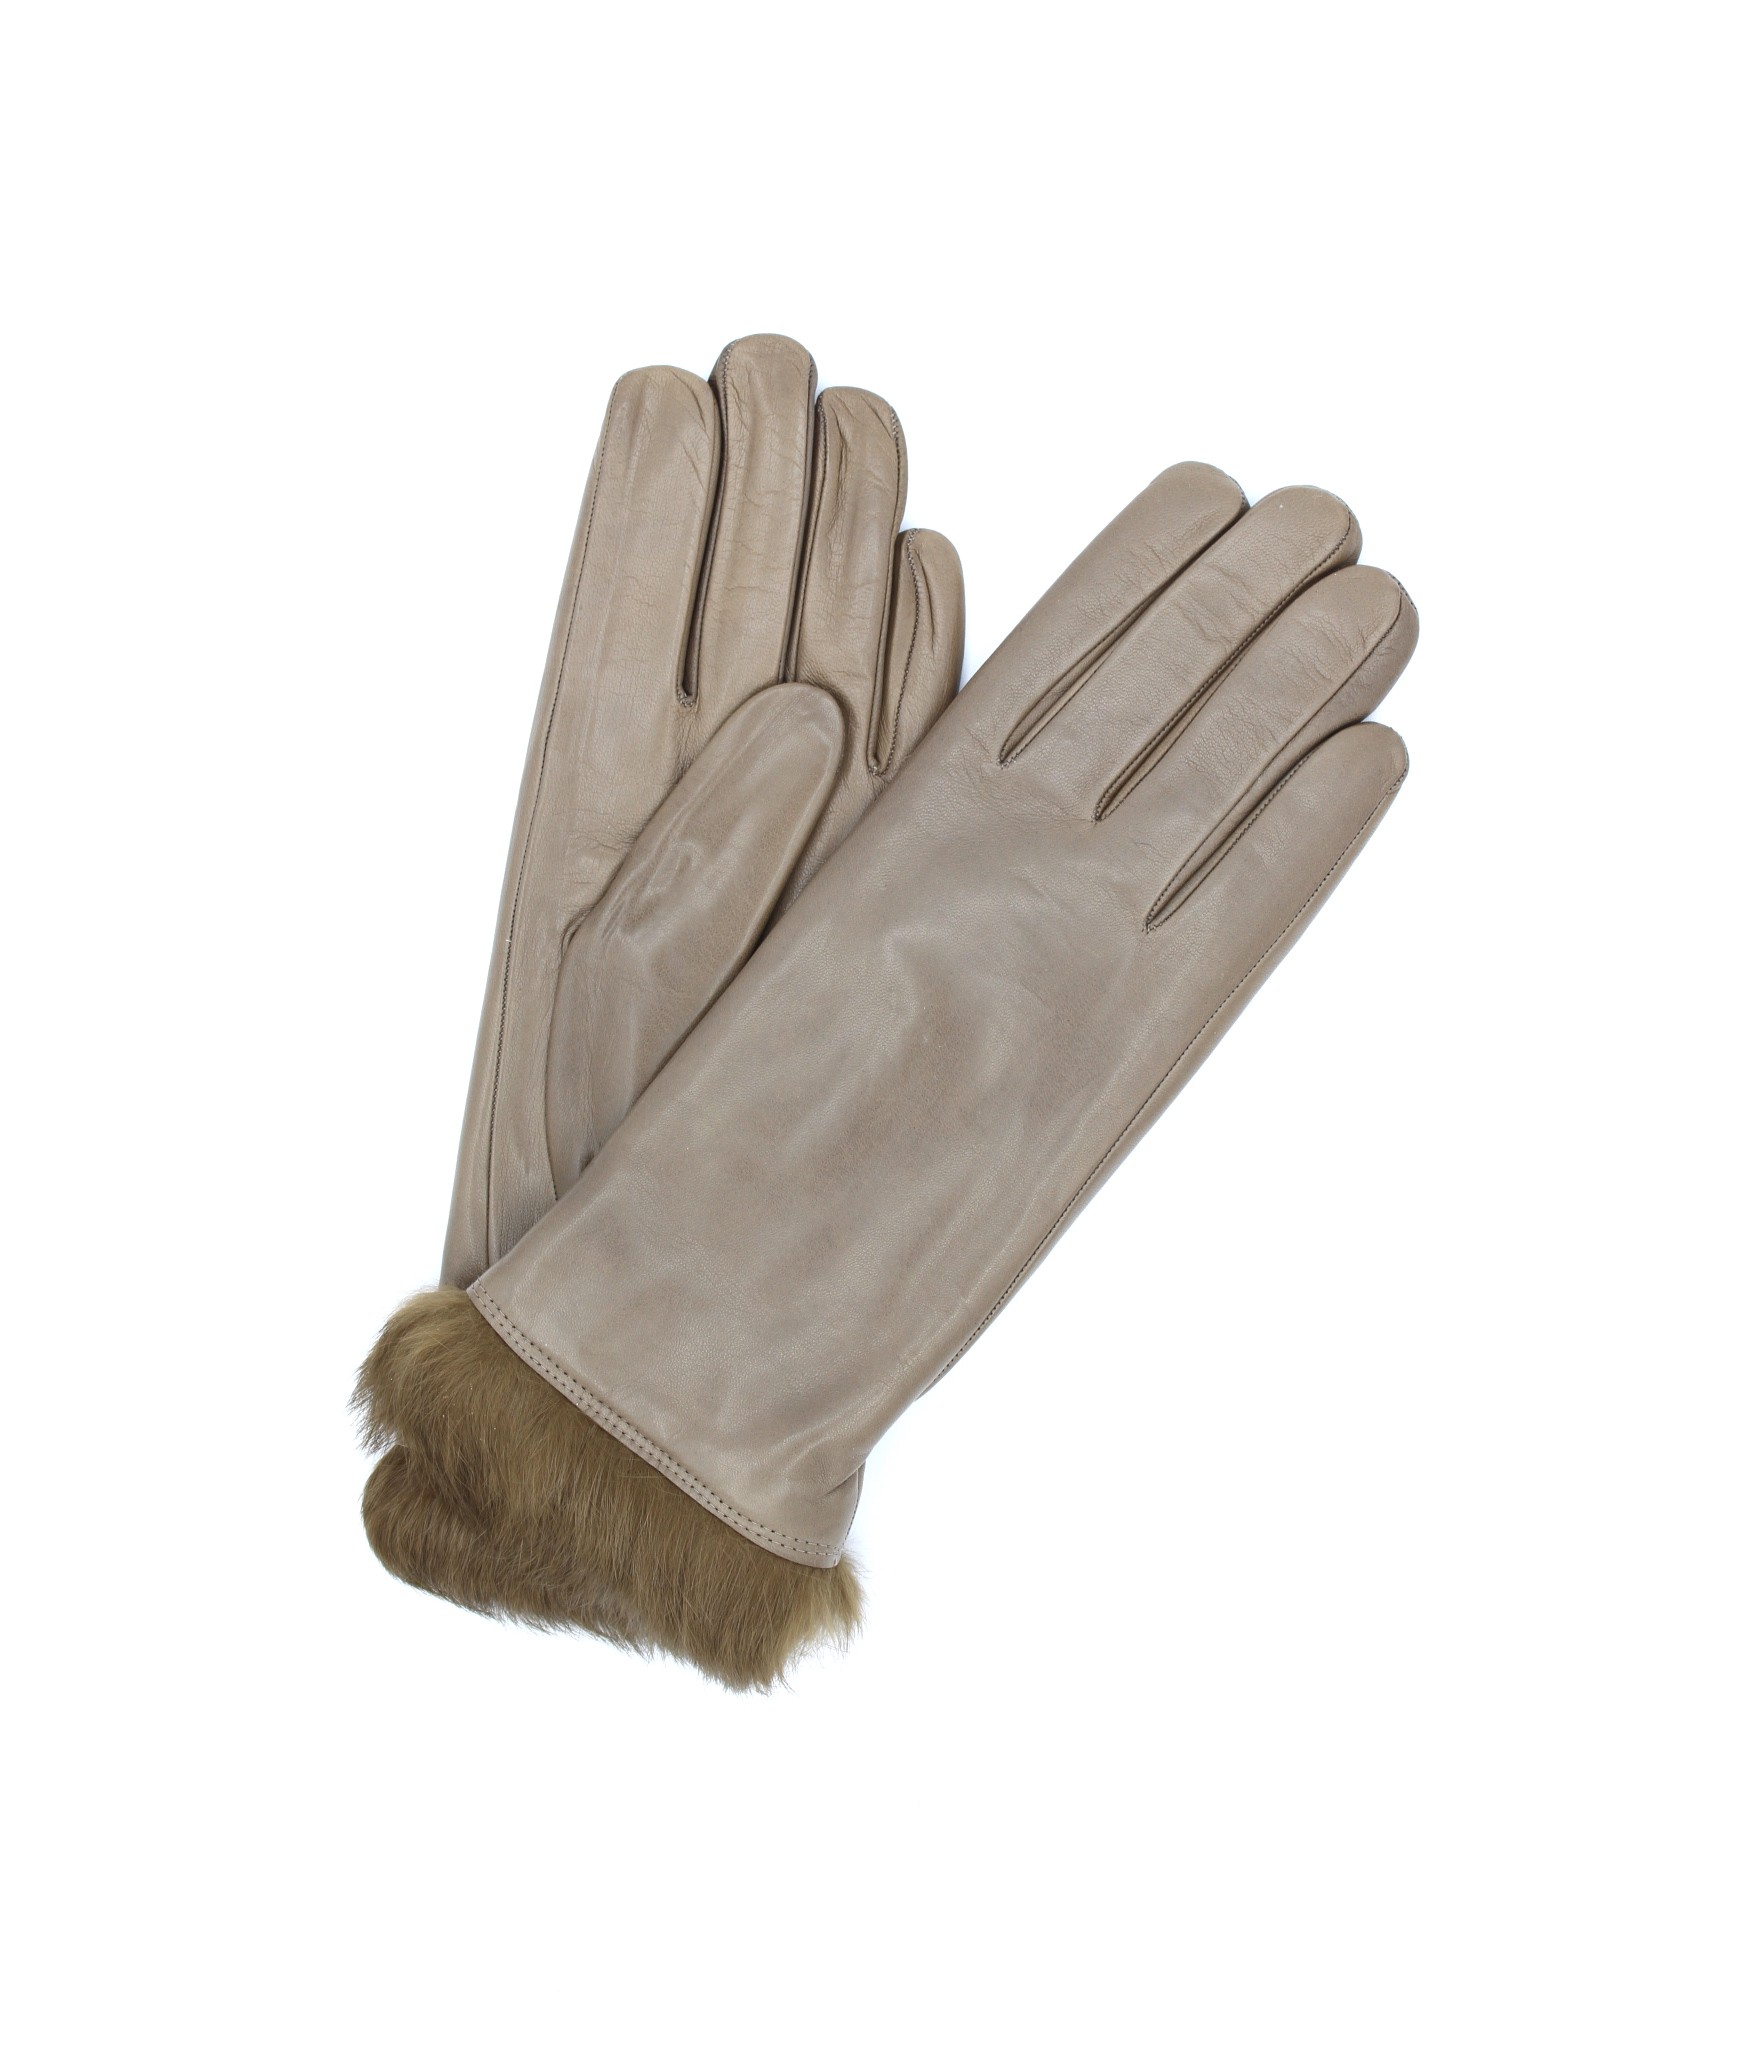 Woman Artik Nappa leather gloves 4bt Rabbir fur lined Mud